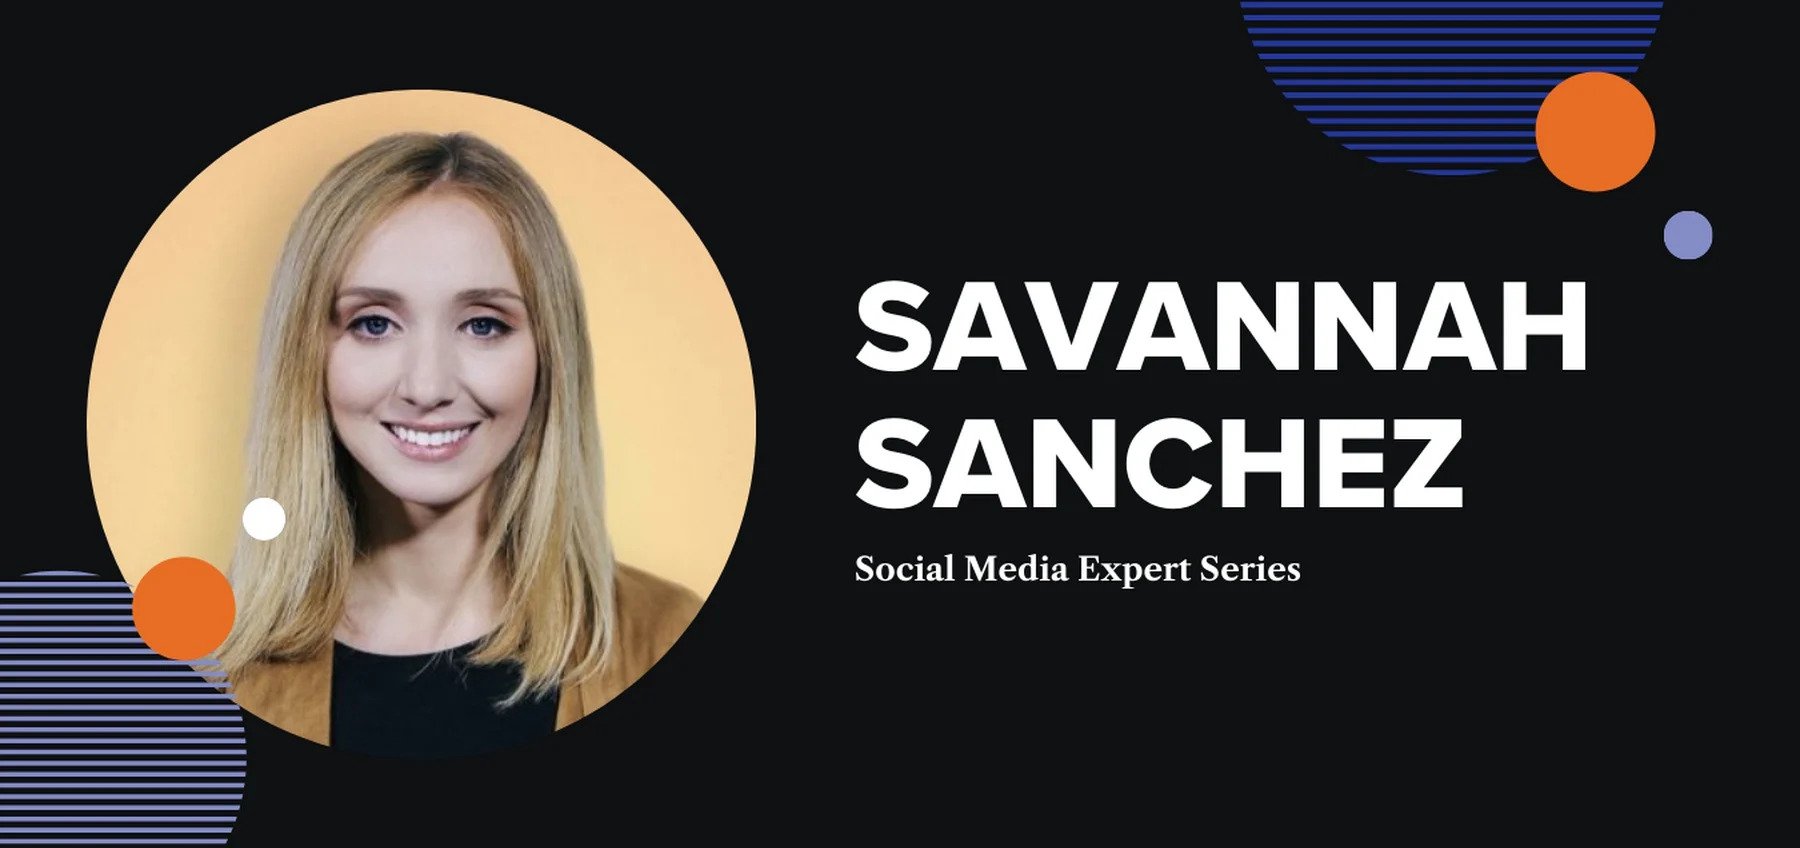 Social Media Expert Series: Q&A with Savannah Sanchez